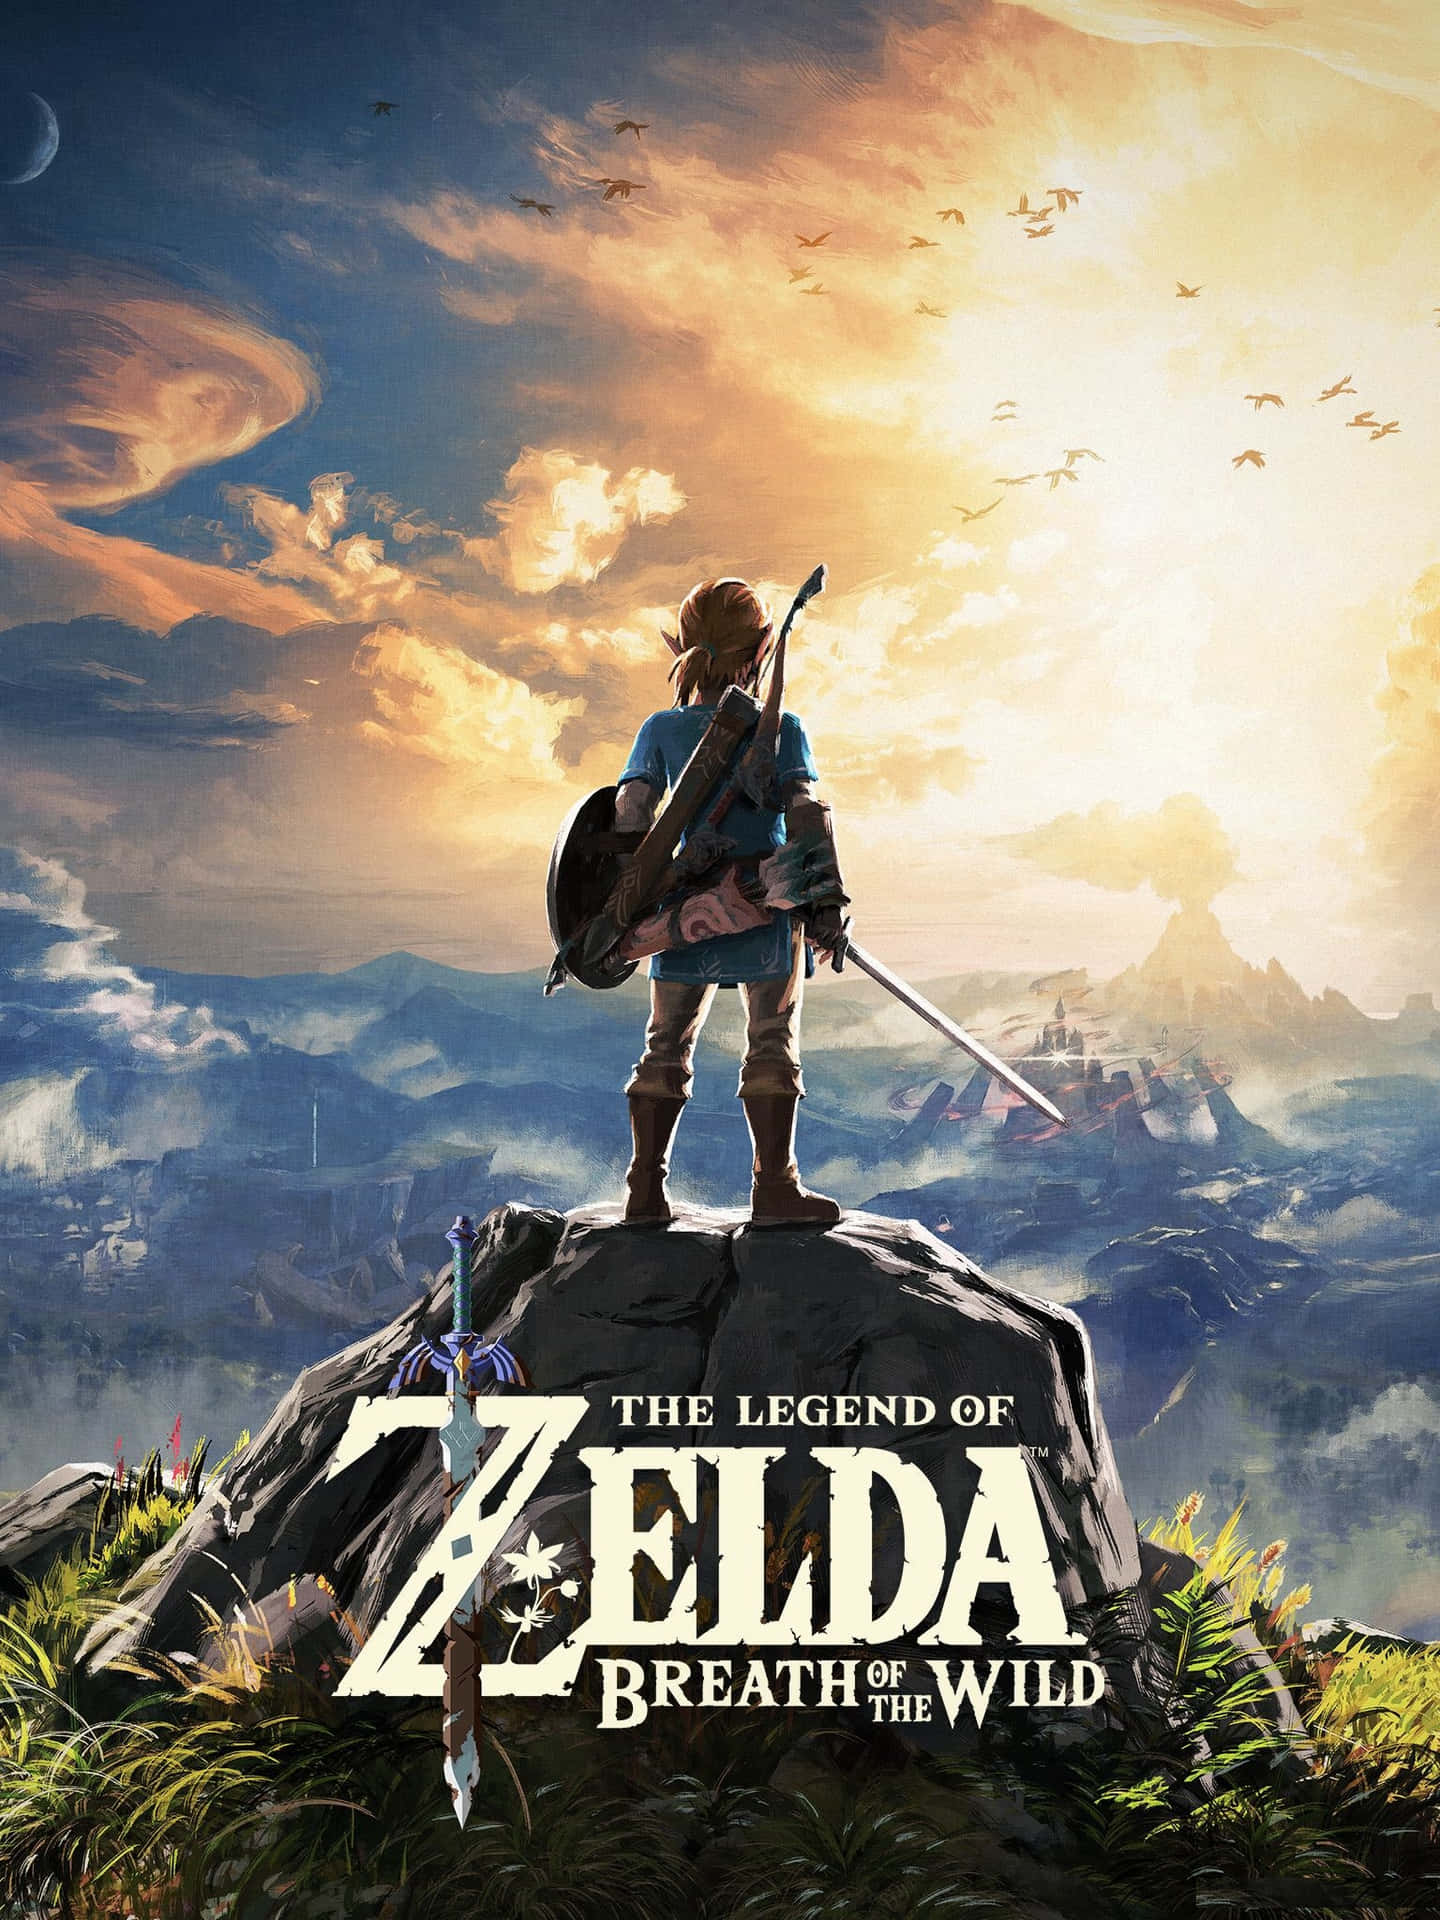 Link facing the vast landscapes of Hyrule in The Legend of Zelda: Breath of the Wild